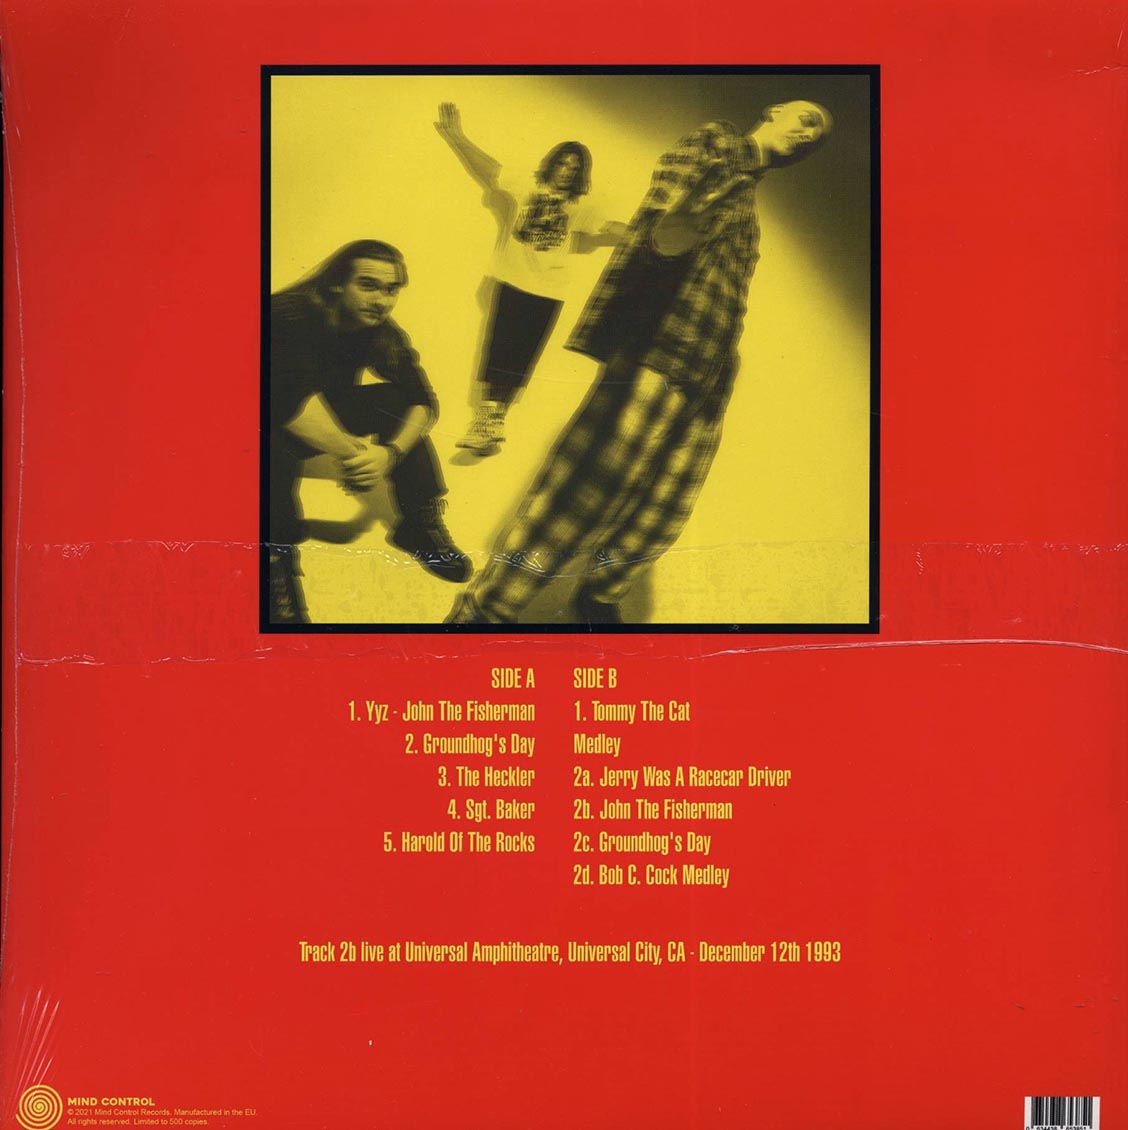 Primus - Stanford University Broadcast May 3rd, 1989 (ltd. 500 copies made) - Vinyl LP, LP